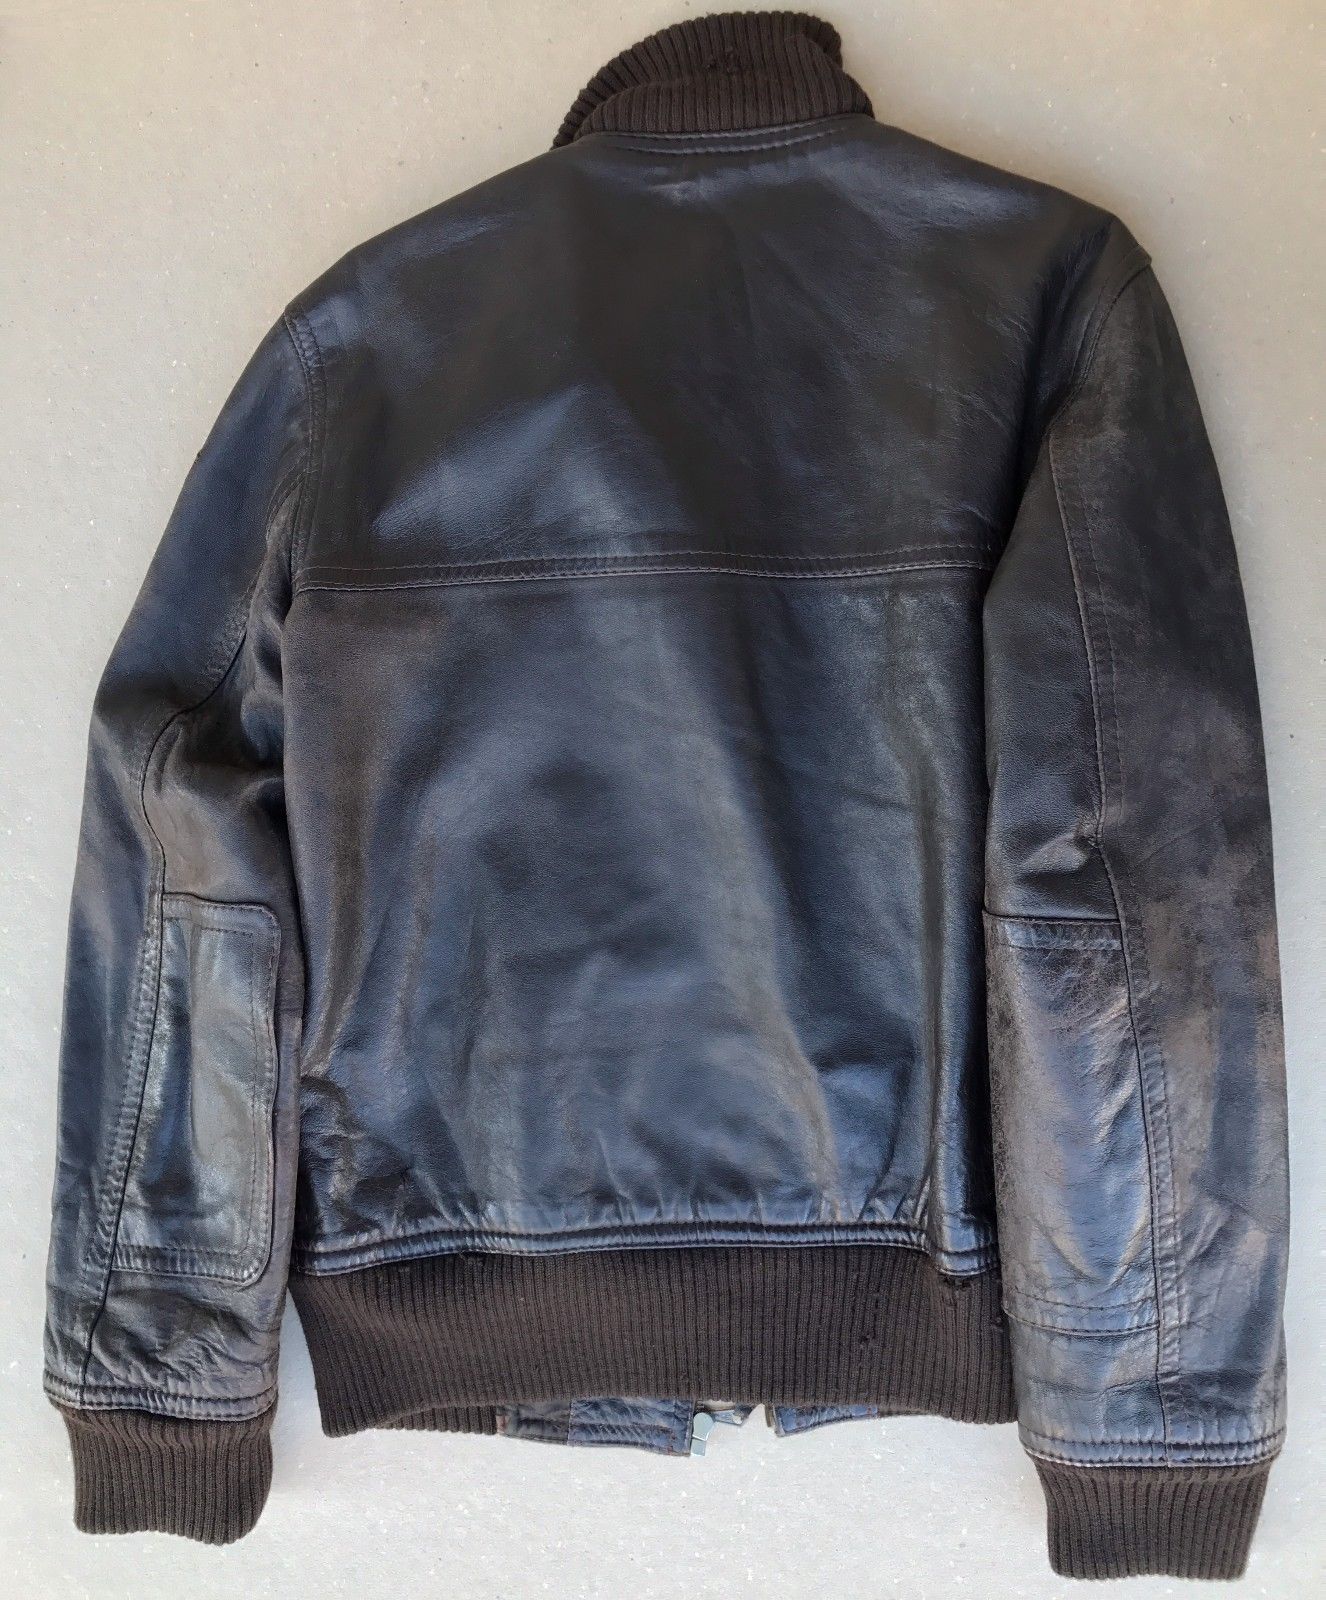 Yugoslav Air Force leather flight jacket | Vintage Leather Jackets Forum